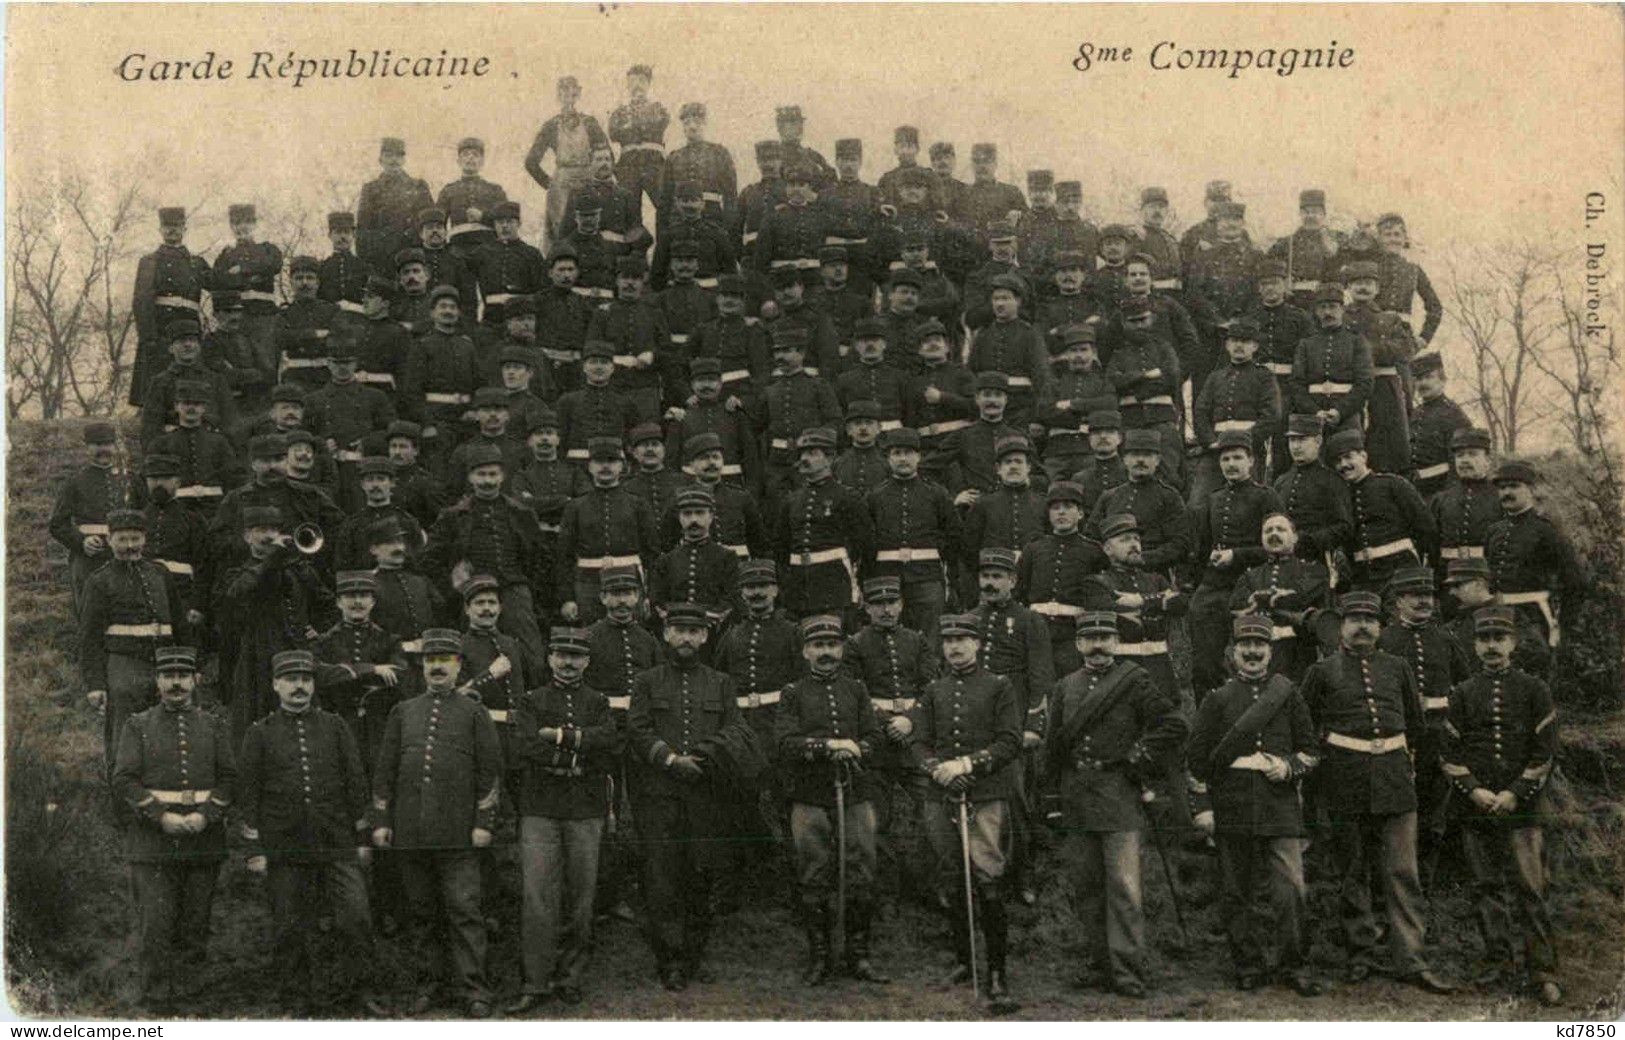 Garde Republicaine 8me Campagnie - Regiments